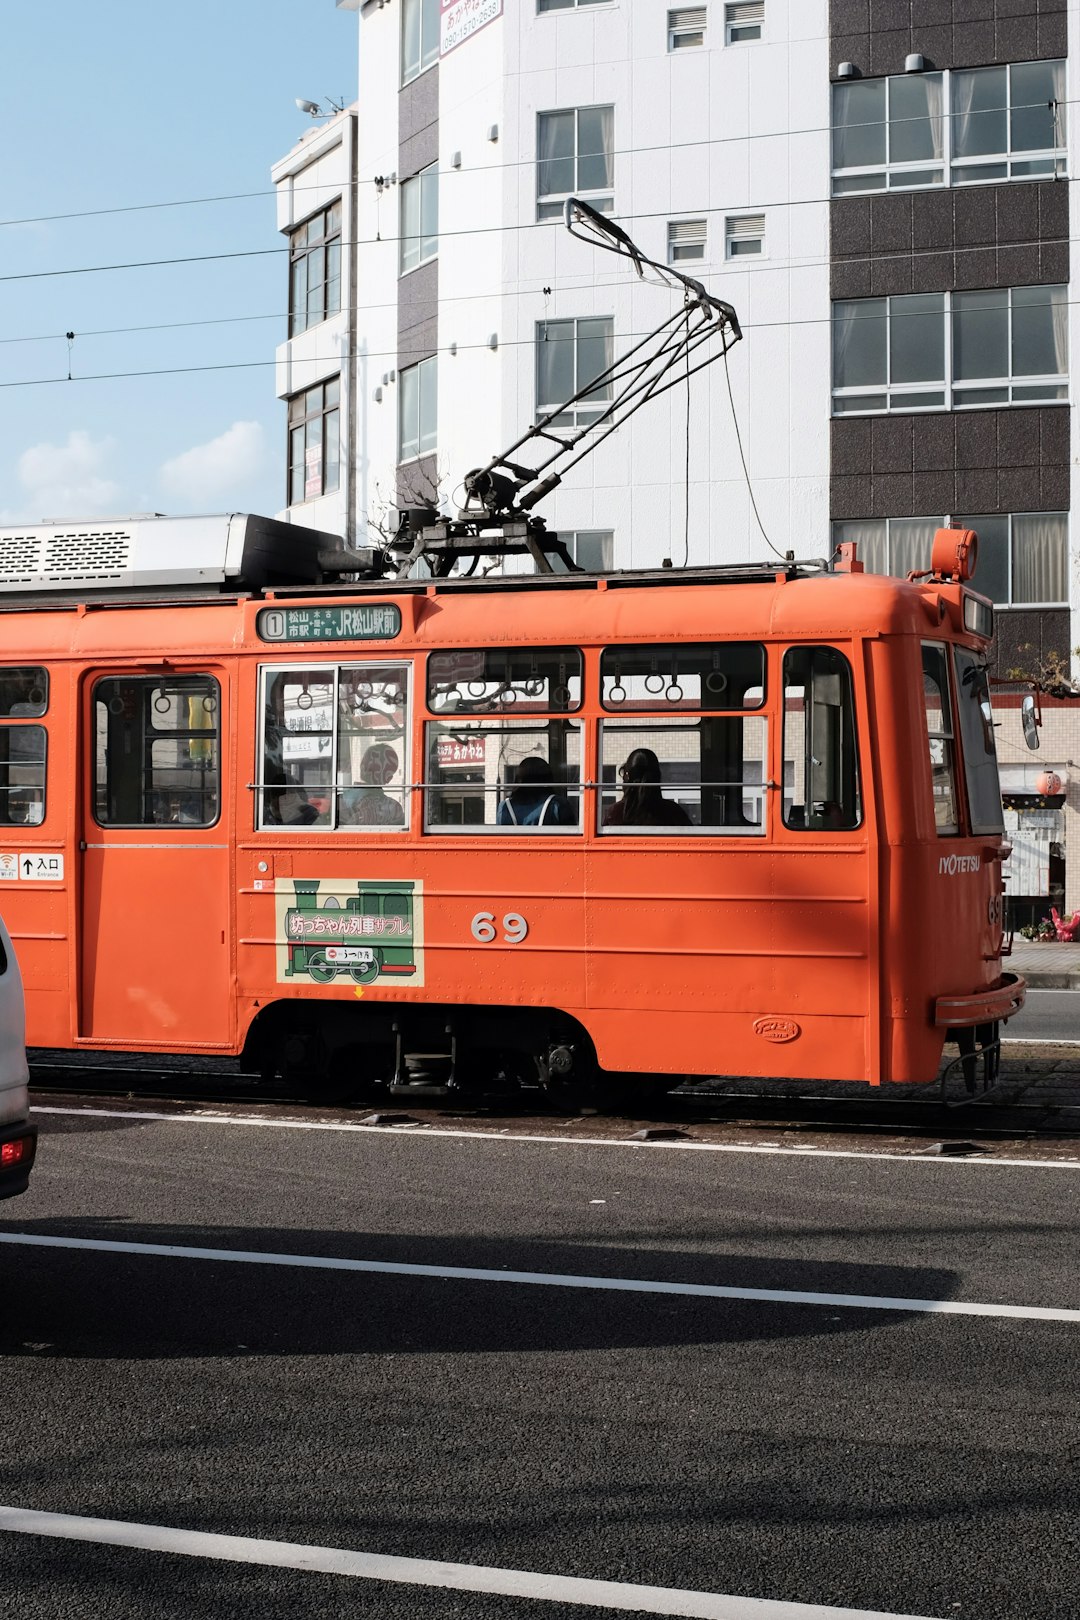 orange and white tram on road during daytime